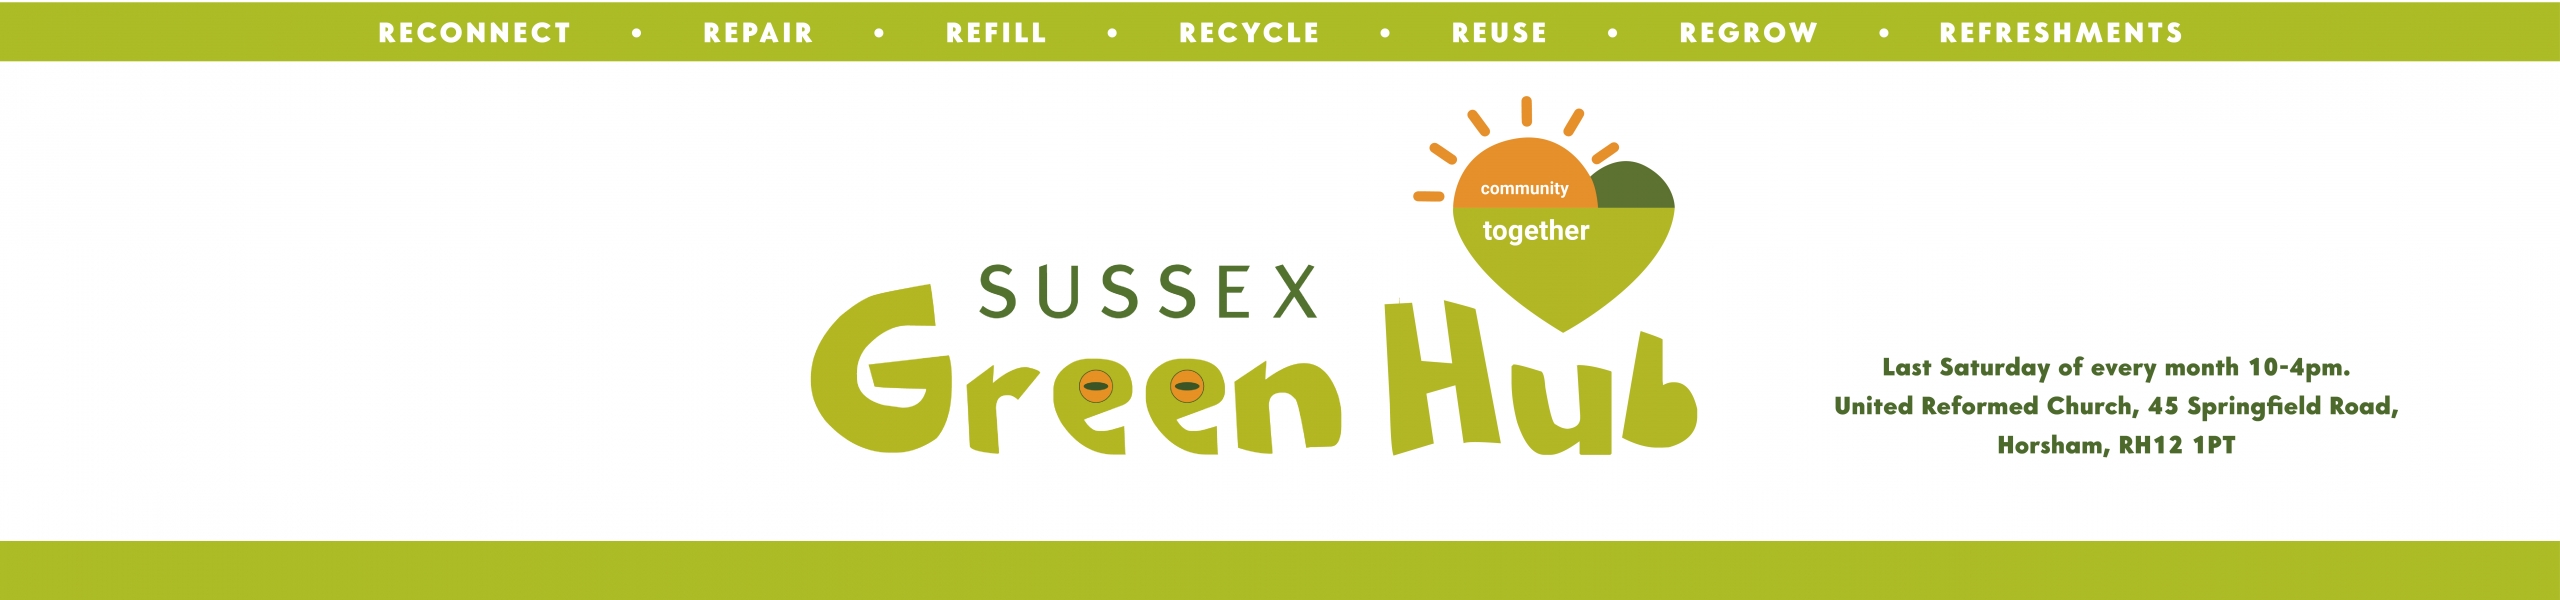 Sussex Green Hub banner